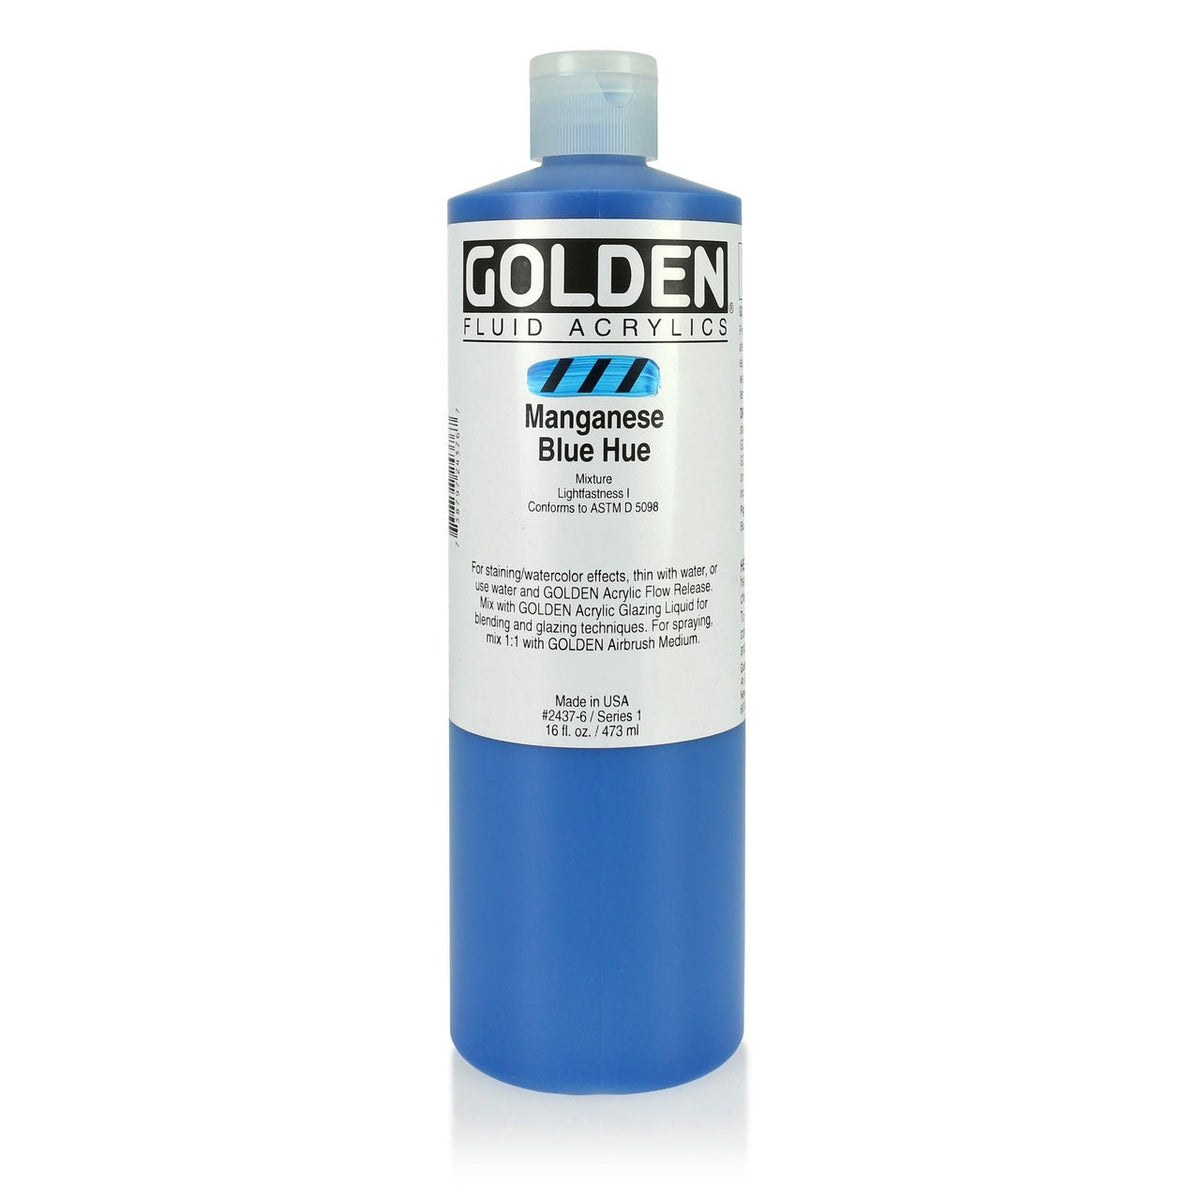 Golden Fluid Acrylic Manganese Blue Hue 16 oz - merriartist.com